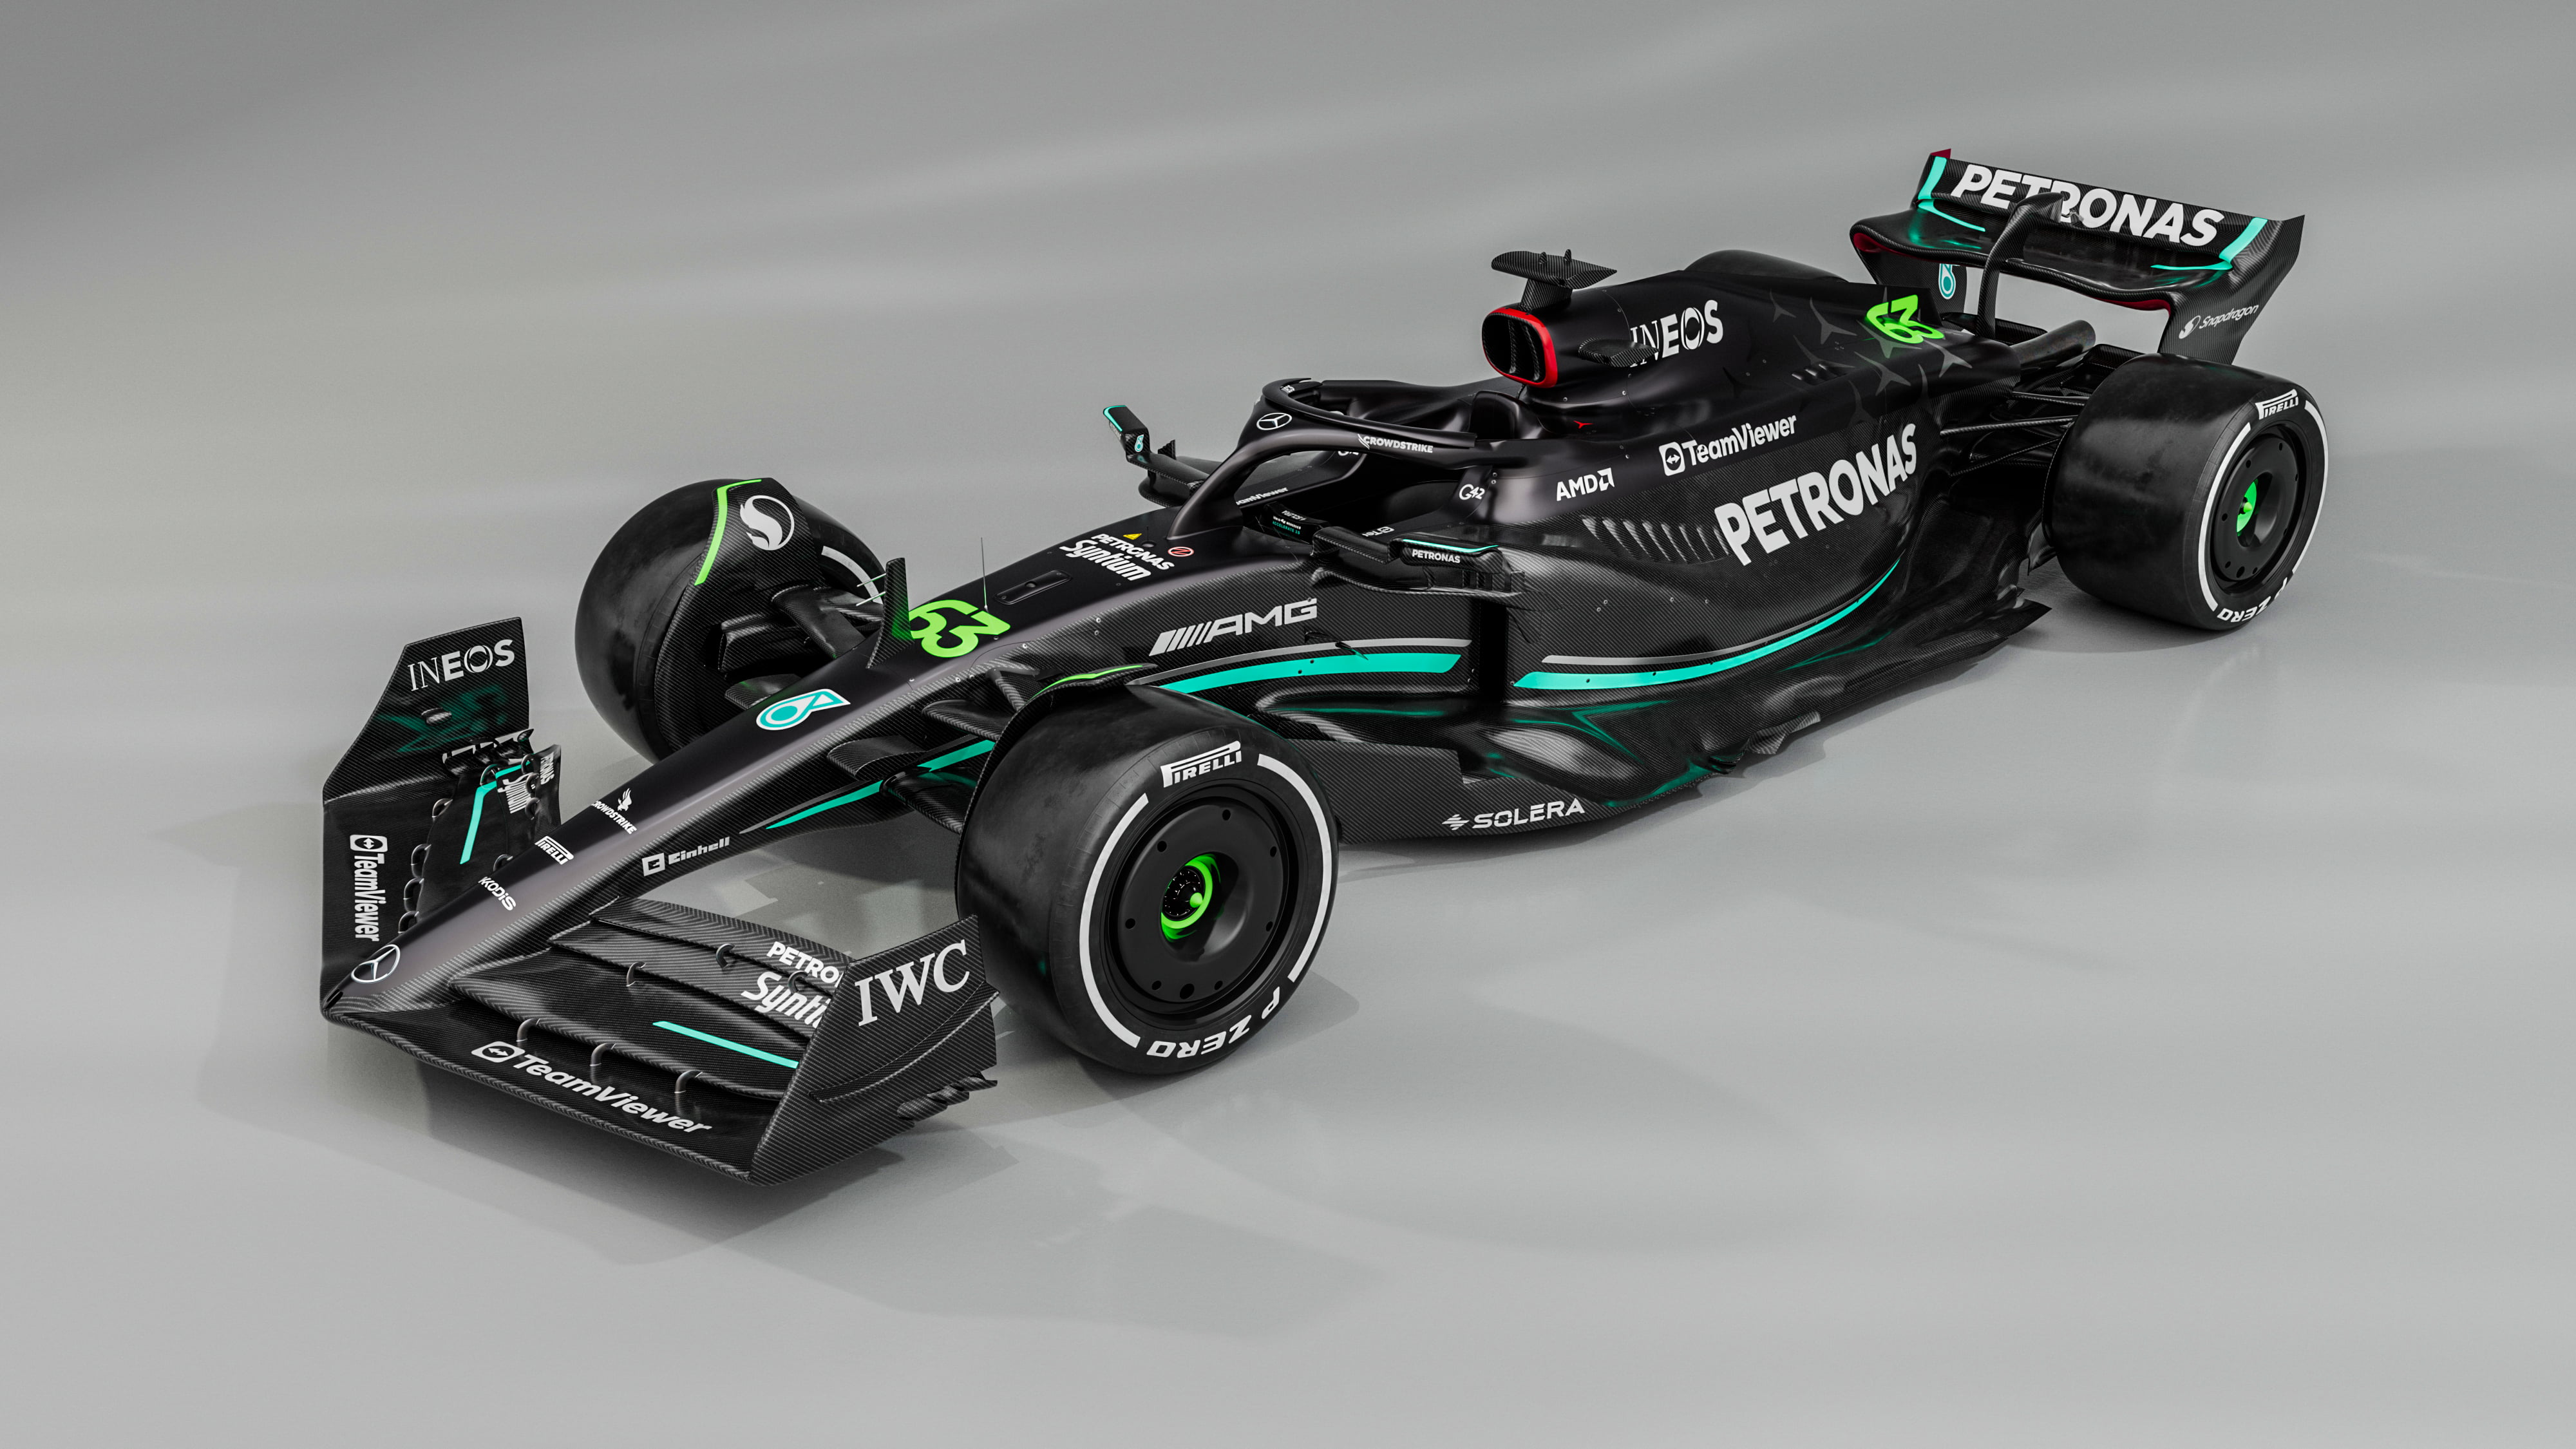 Formula 1, formula cars, Mercedes AMG Petronas, Mercedes AMG Racing